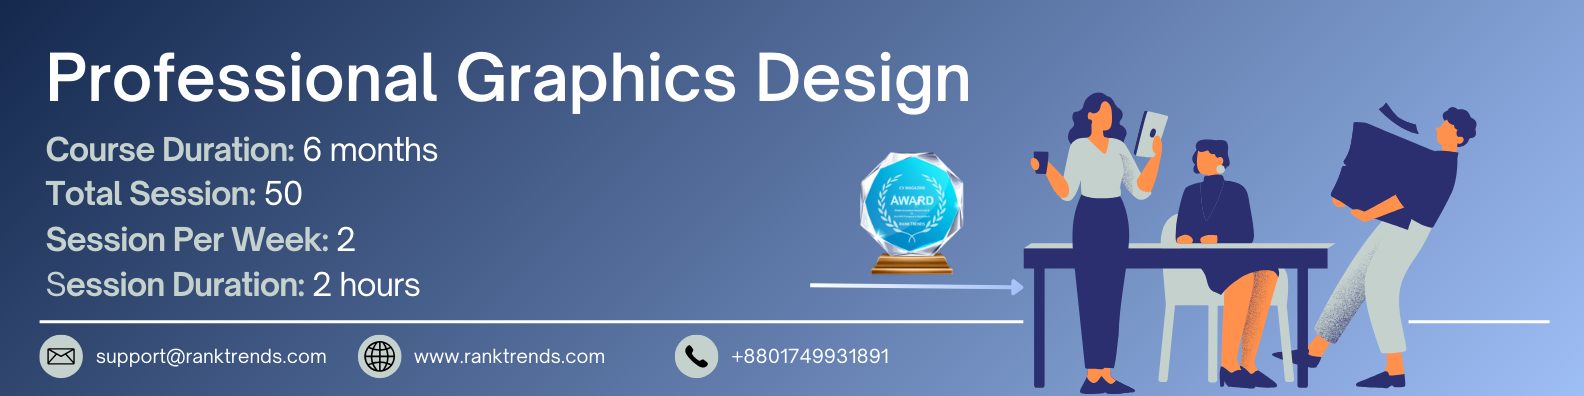 rank-trends-professional-graphics-design-course